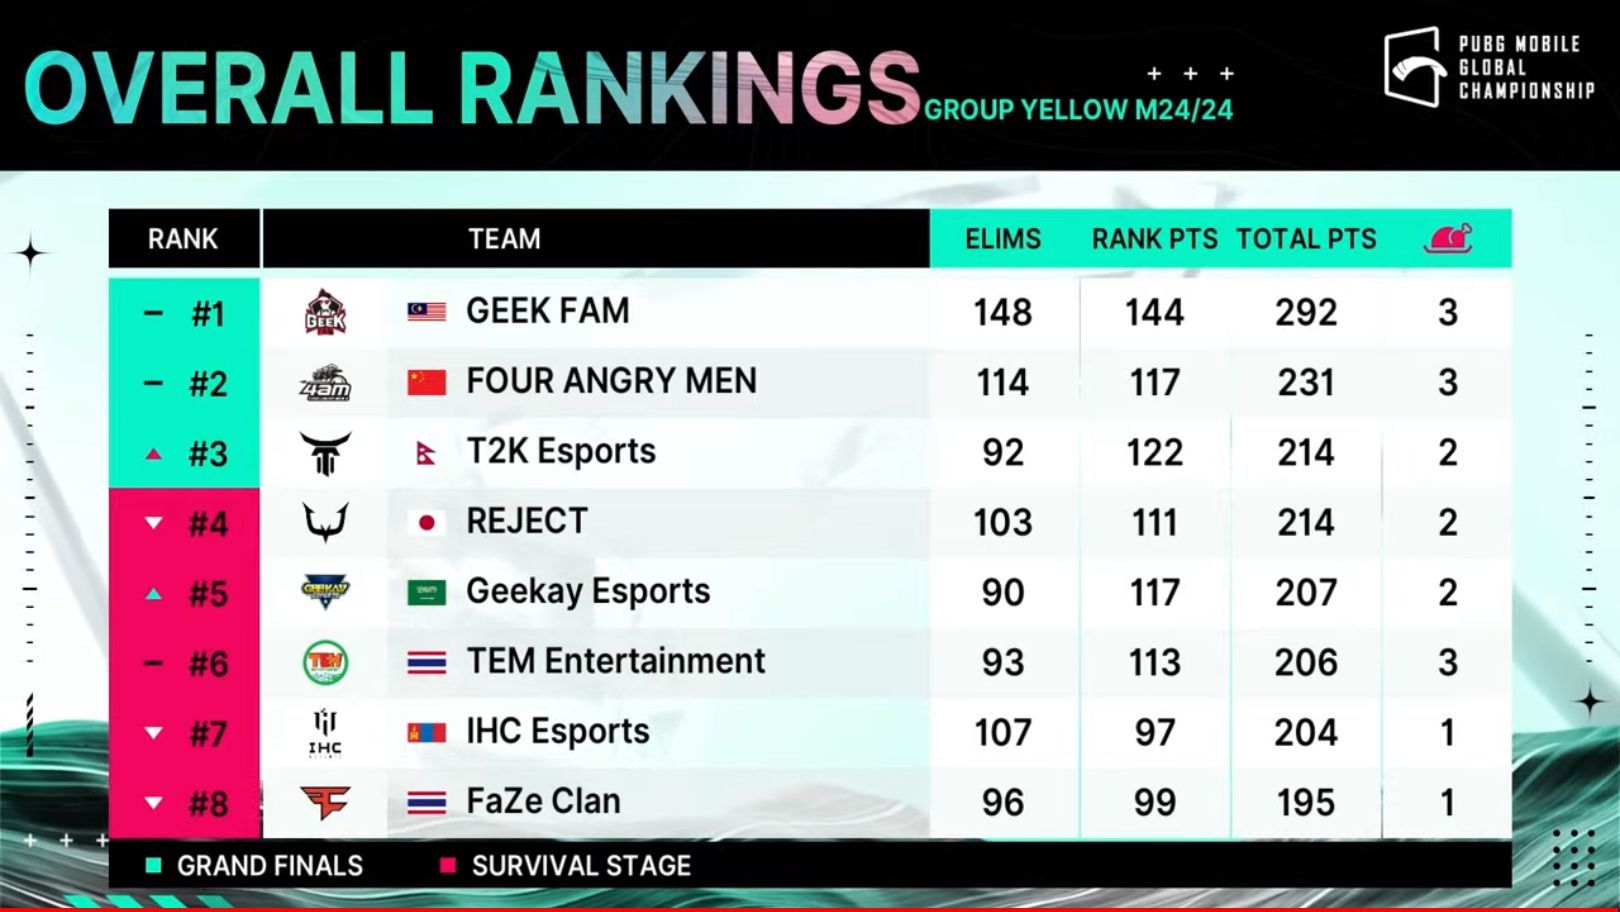 Geek Fam showed impressive performances in PMGC Group Yellow (Image via PUBG Mobile)